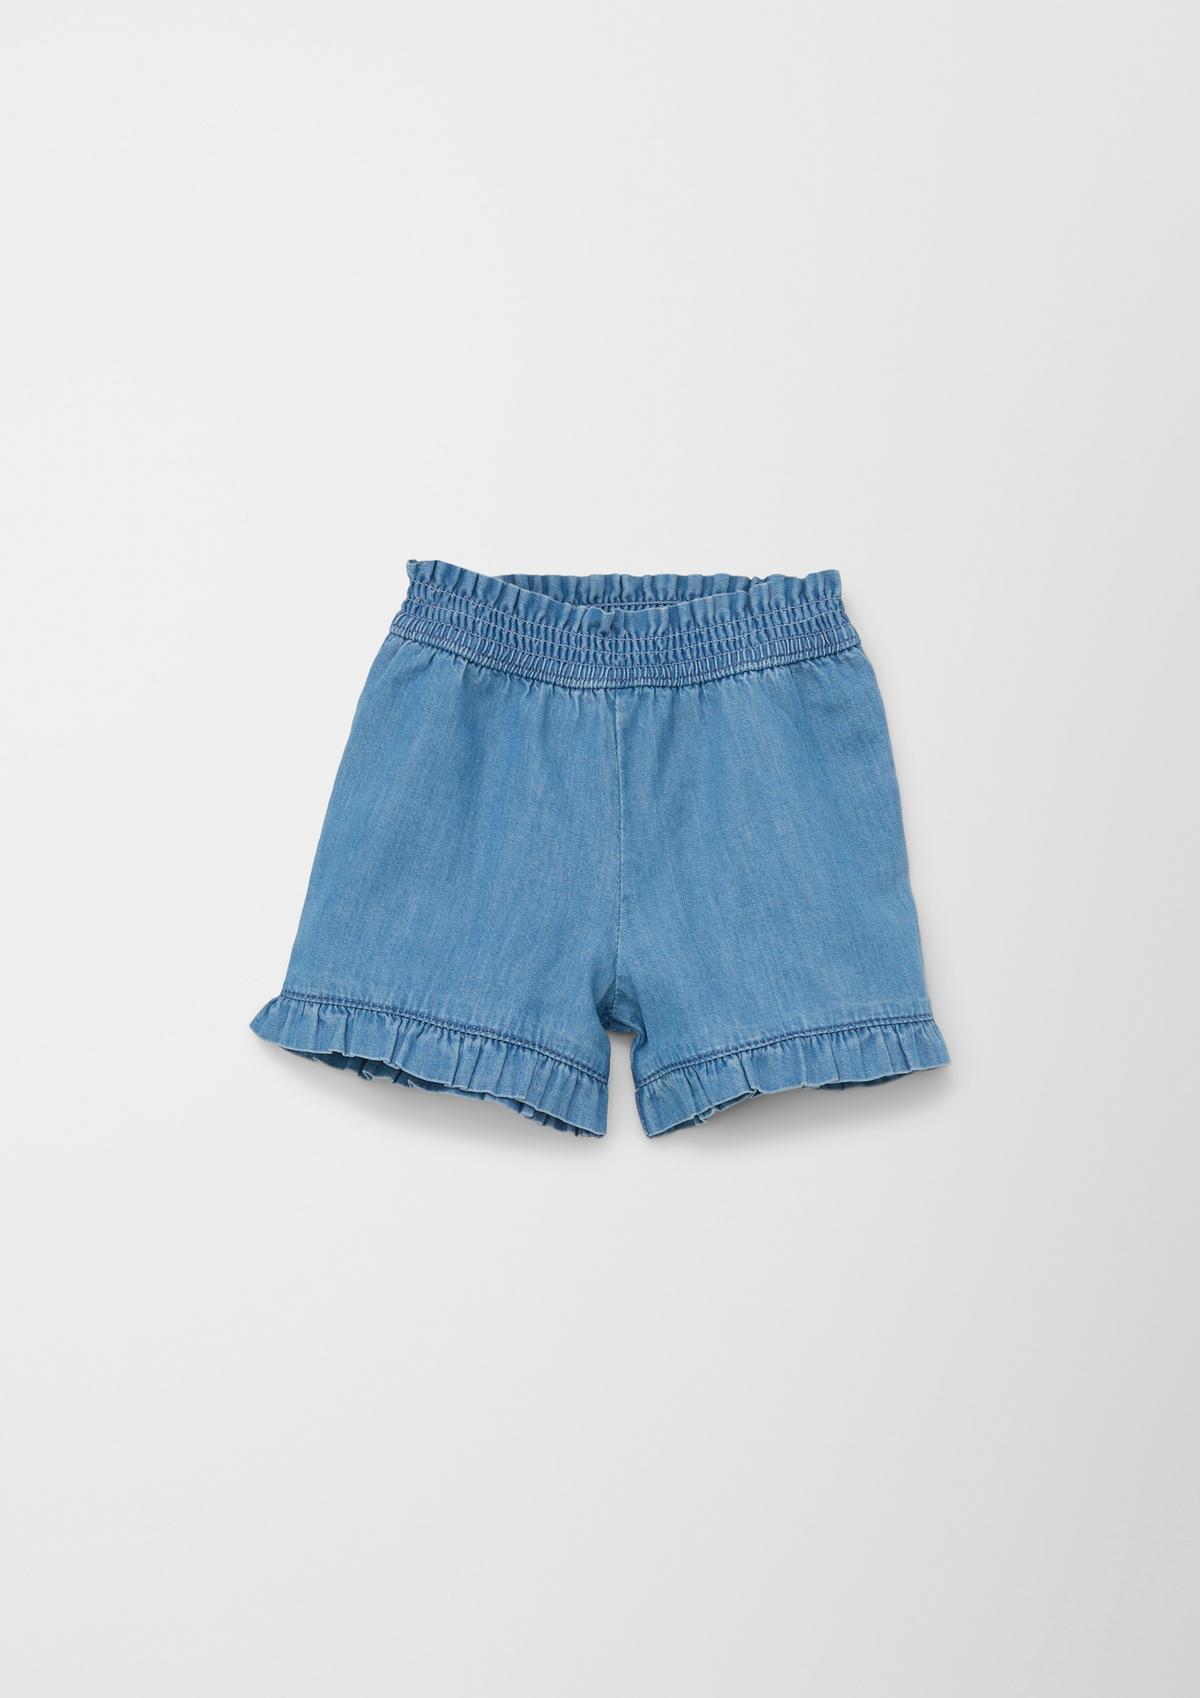 s.Oliver Denim shorts / regular fit / high rise / elasticated waistband